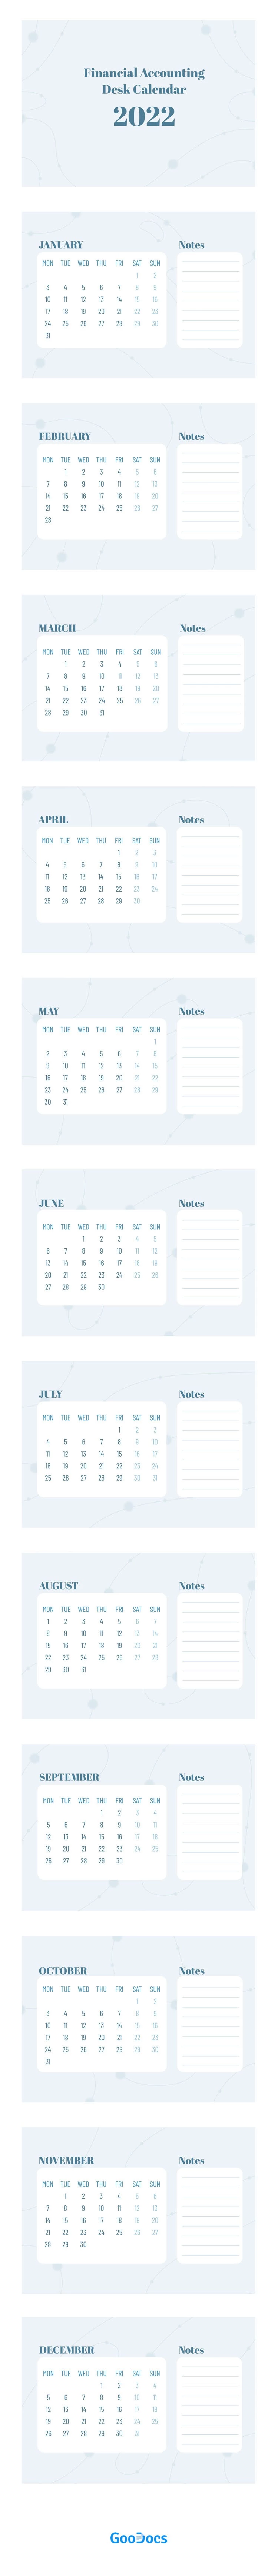 Calendario da scrivania di contabilità finanziaria - free Google Docs Template - 10061940